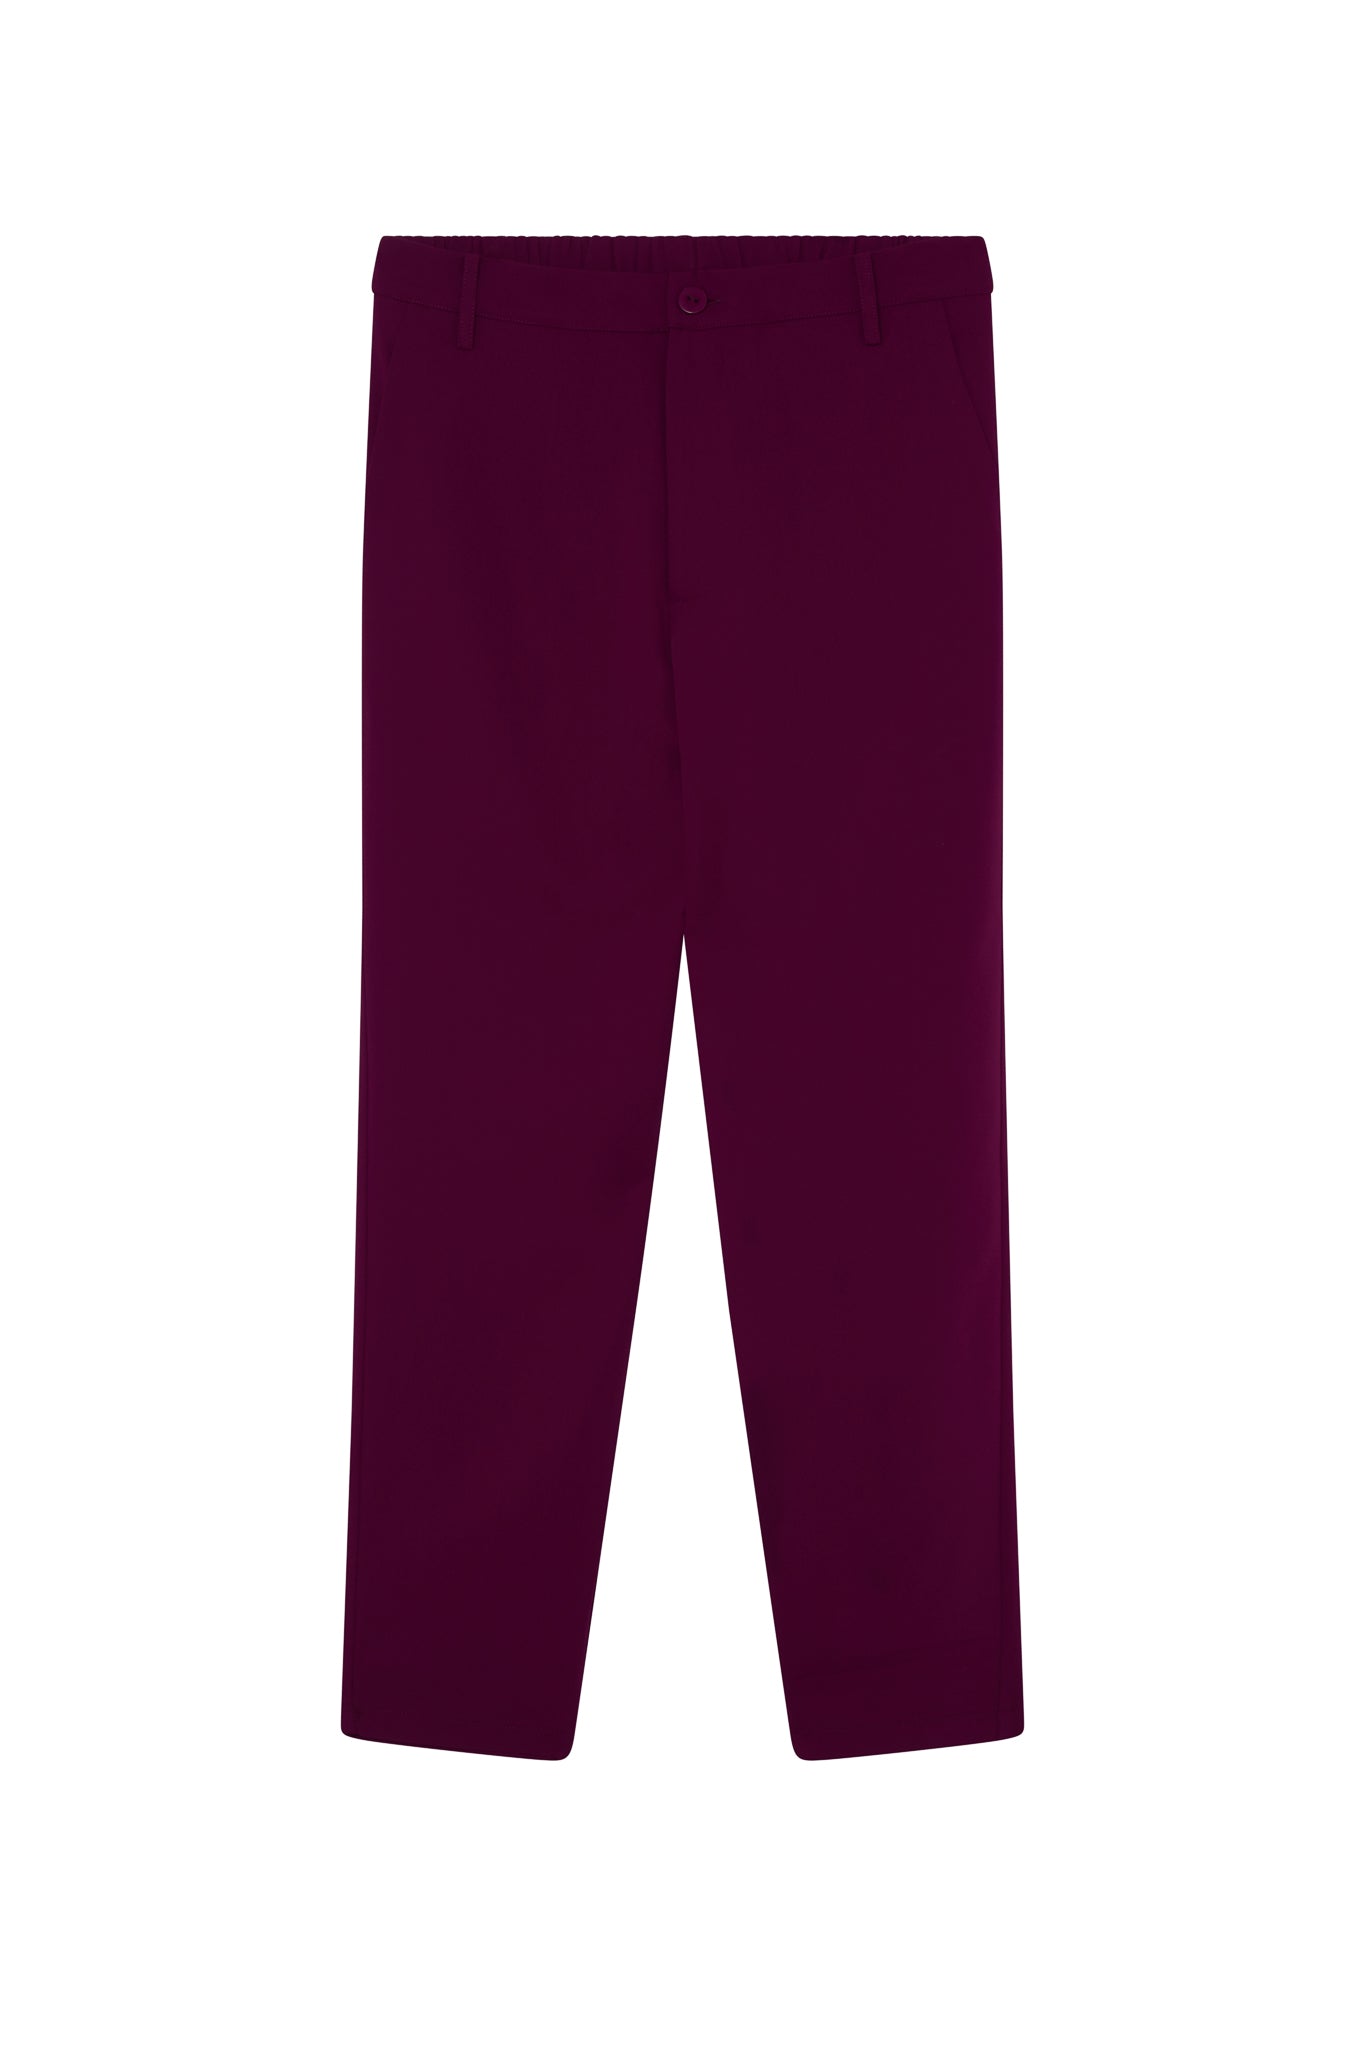 kpoplk Men's Pants,Mens Cool Joggers Pants 3D Novelty Casual Sweatpants  Oversized Trousers(Khaki,XXL) - Walmart.com